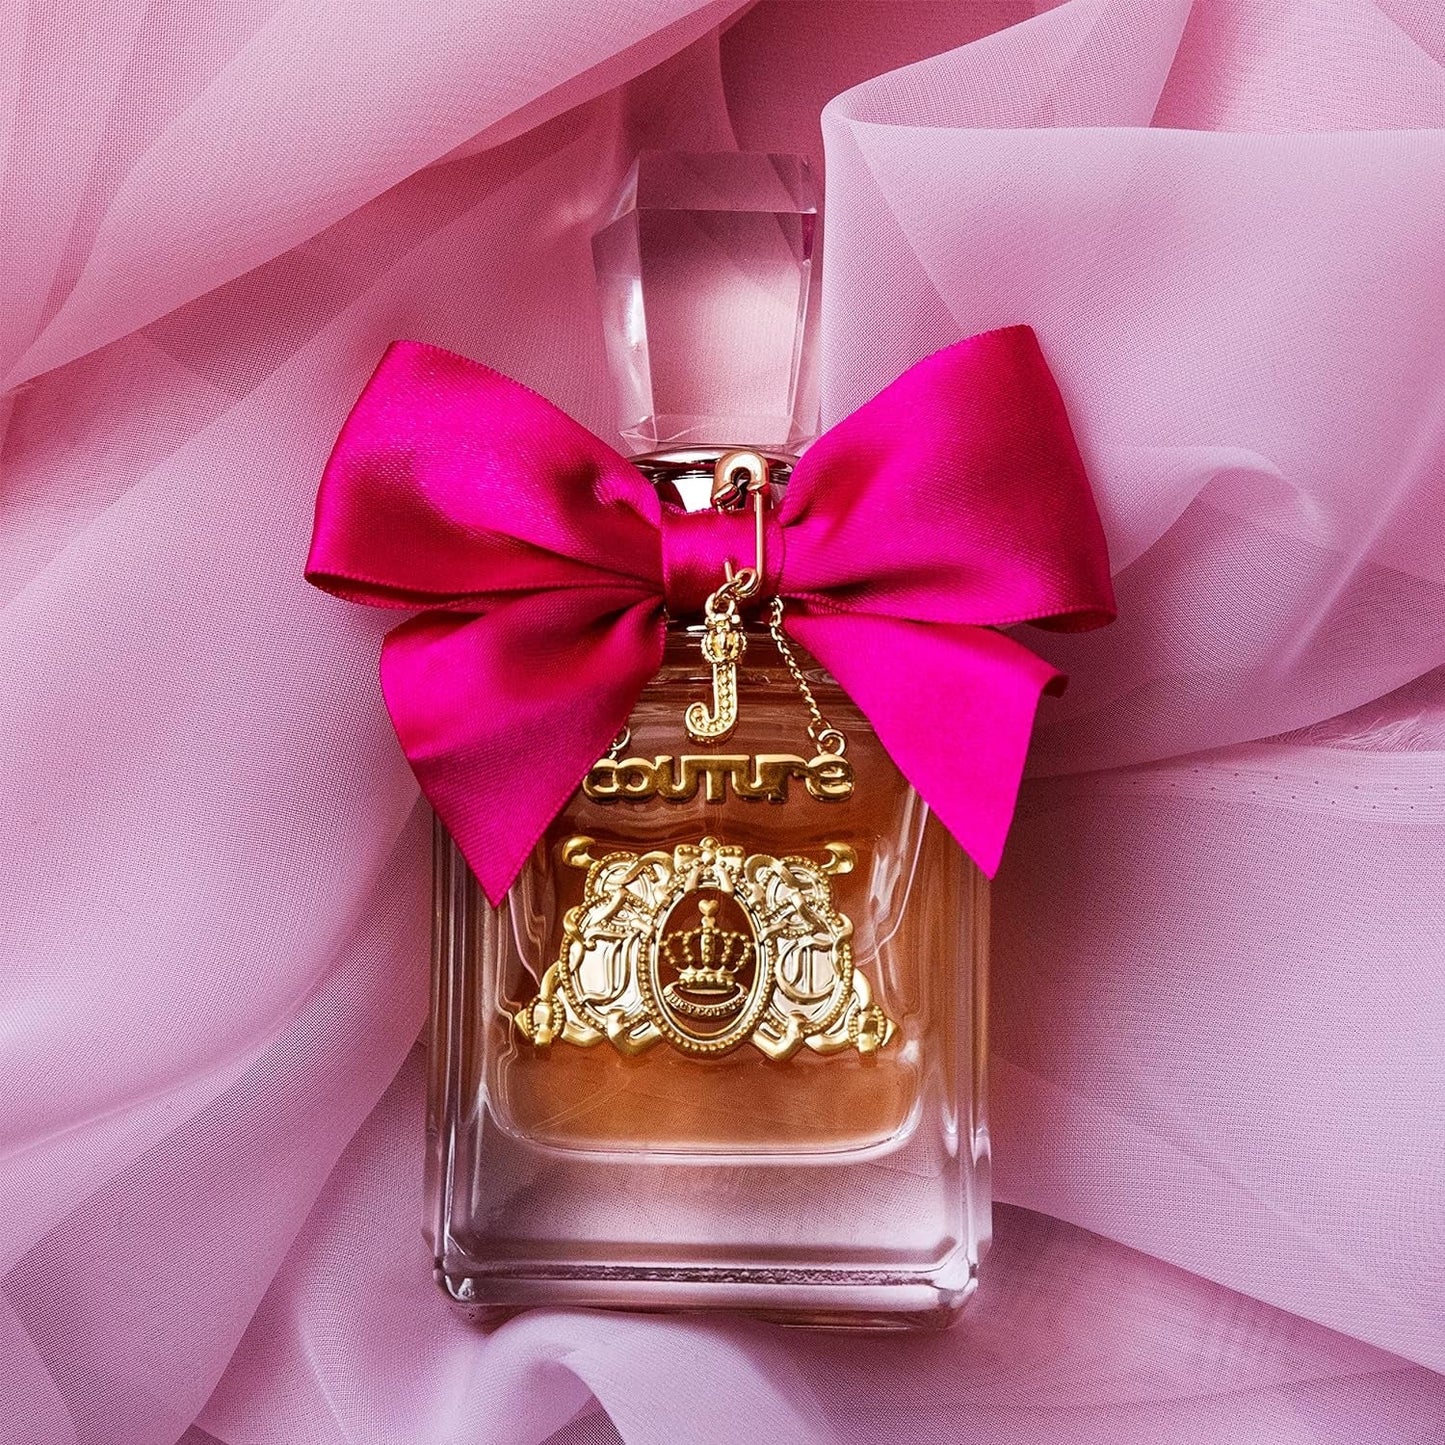 Viva La Juicy Perfume for Women 3.4 Oz Eau De Parfum